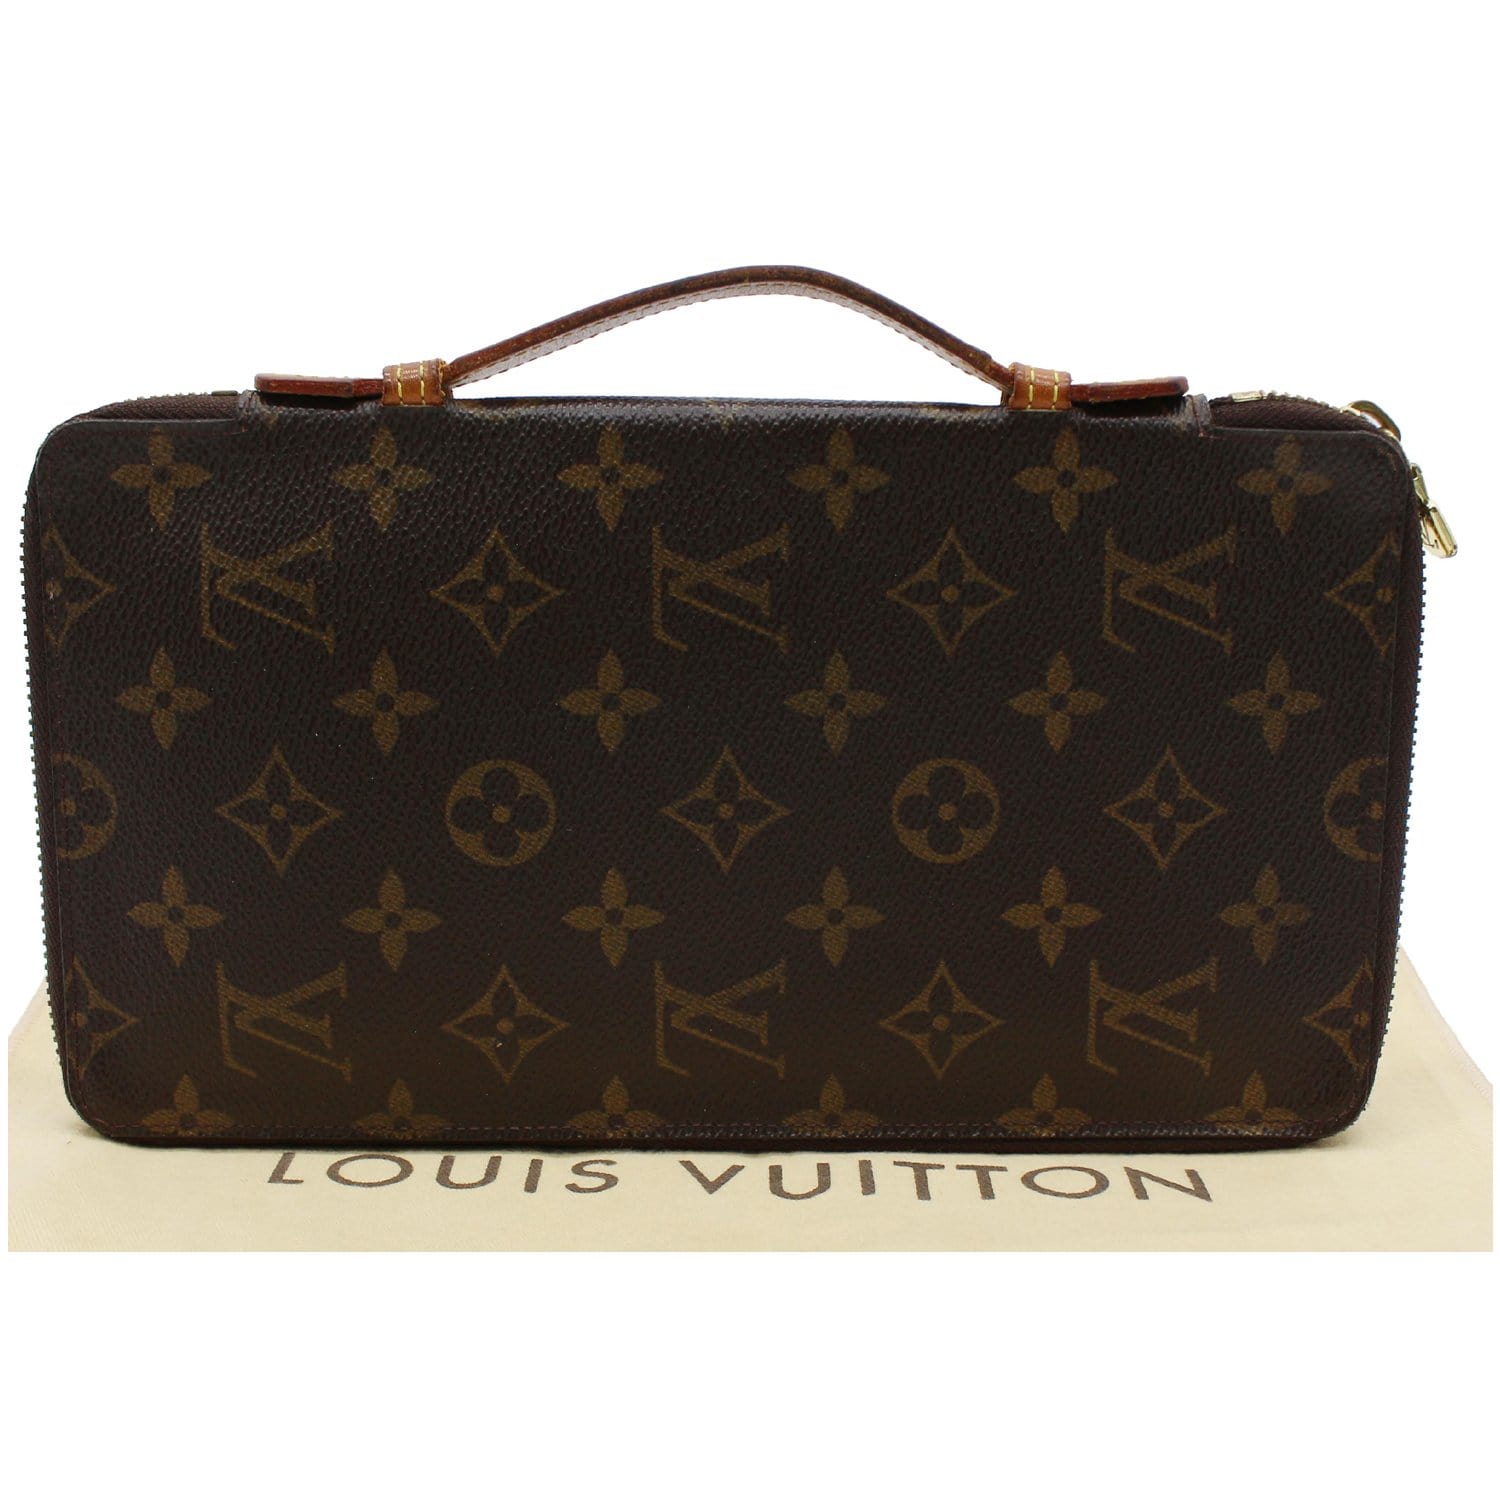 Louis Vuitton Daily Organizer  Louis vuitton bag, Louis vuitton, Bags